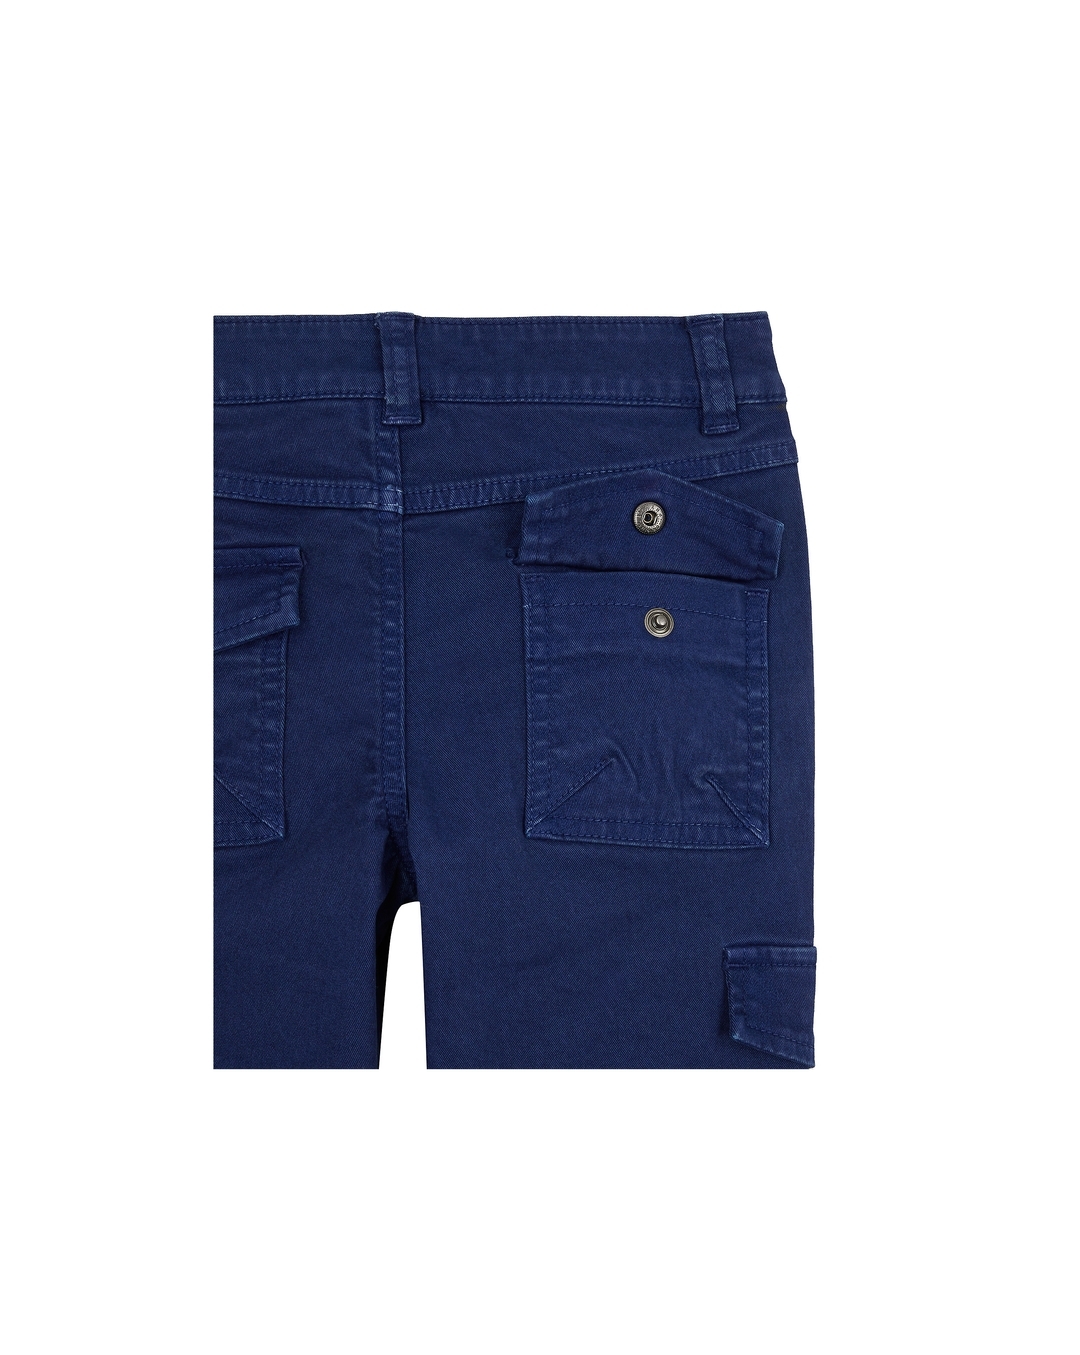 Six Pocket Pants for Boys Boys Stylish Cargo PantsBoys Jogger Jeans   Comfortable Cotton Boys